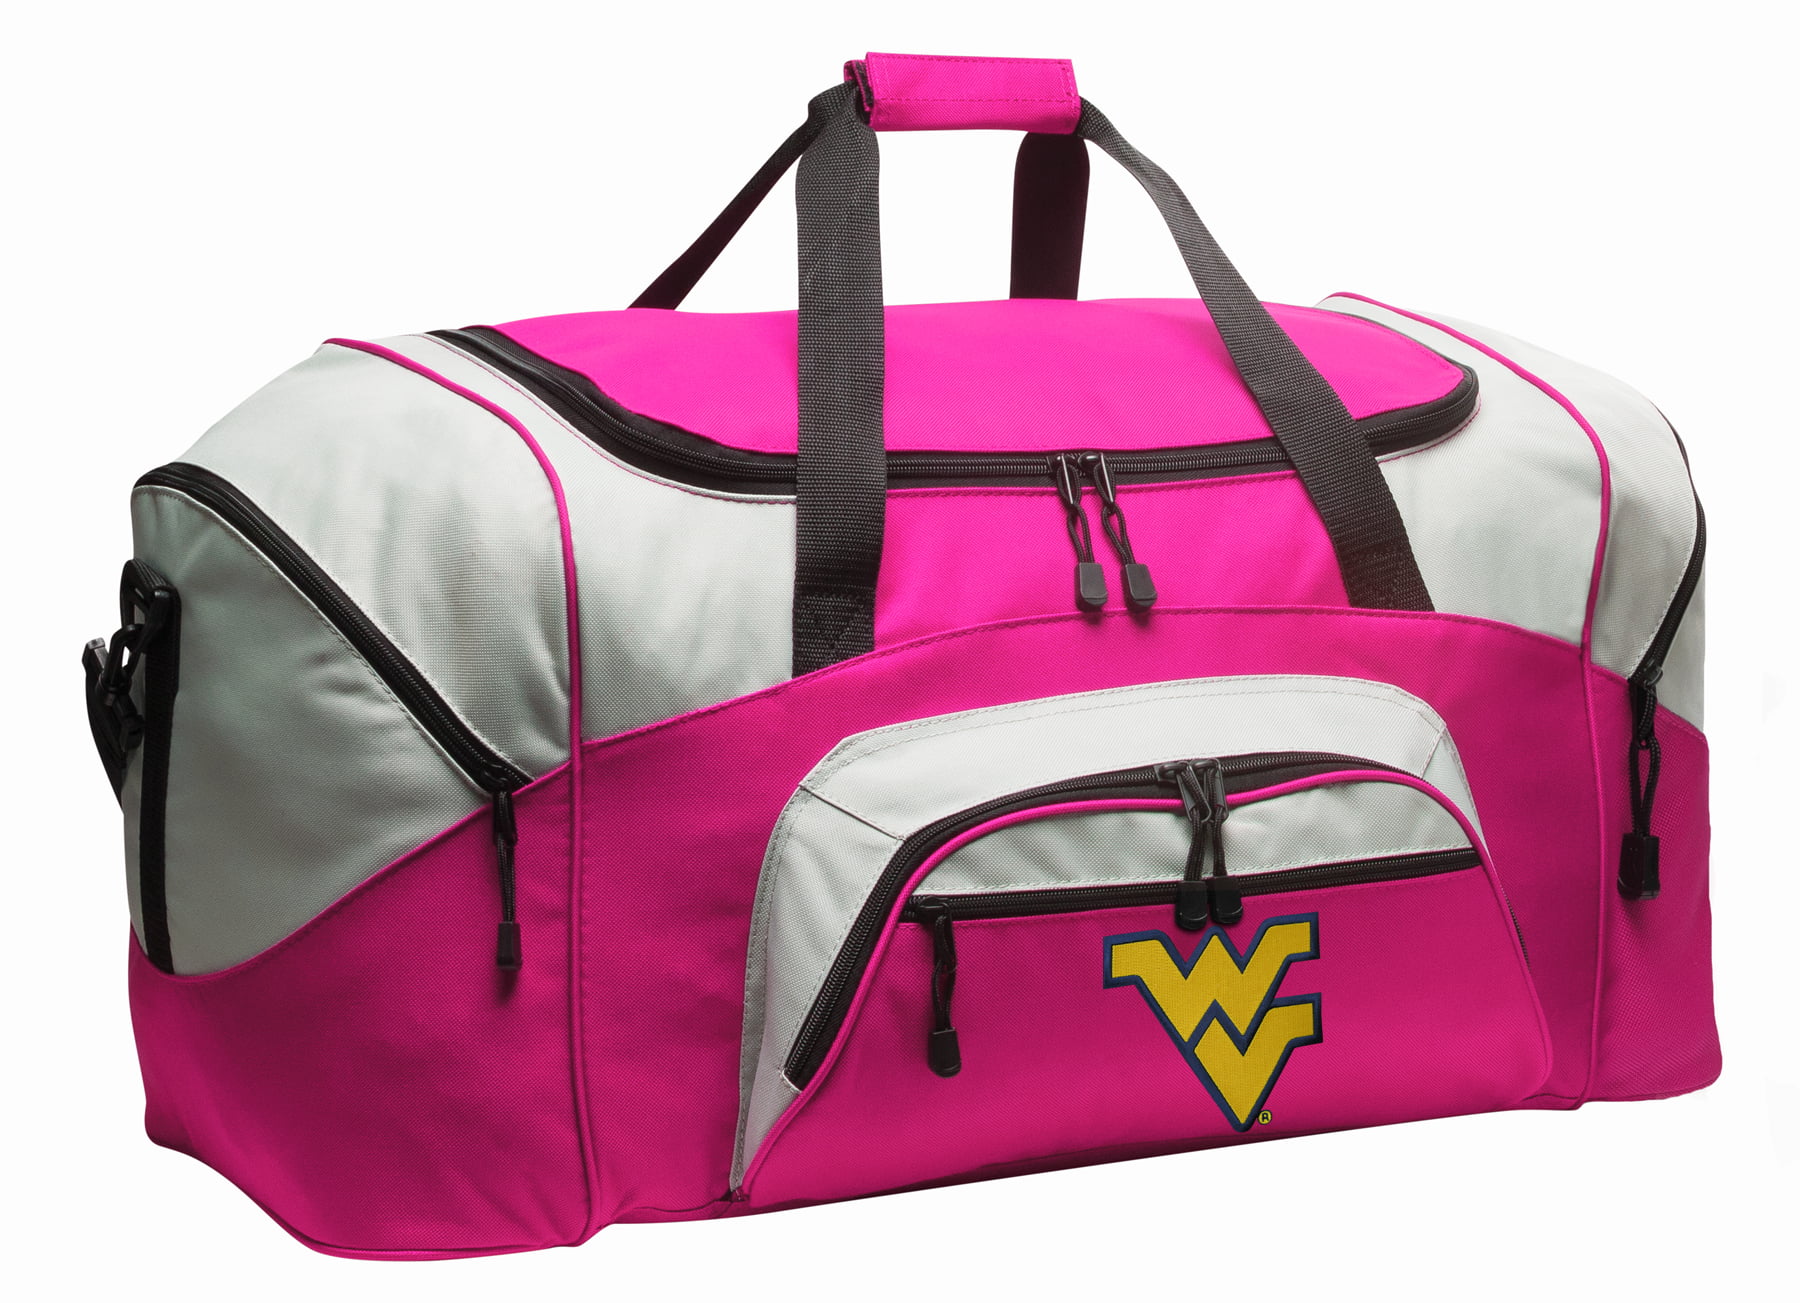 Large WVU Duffel Bag West Virginia University Suitcase or Gym Bag for Men Or Her 